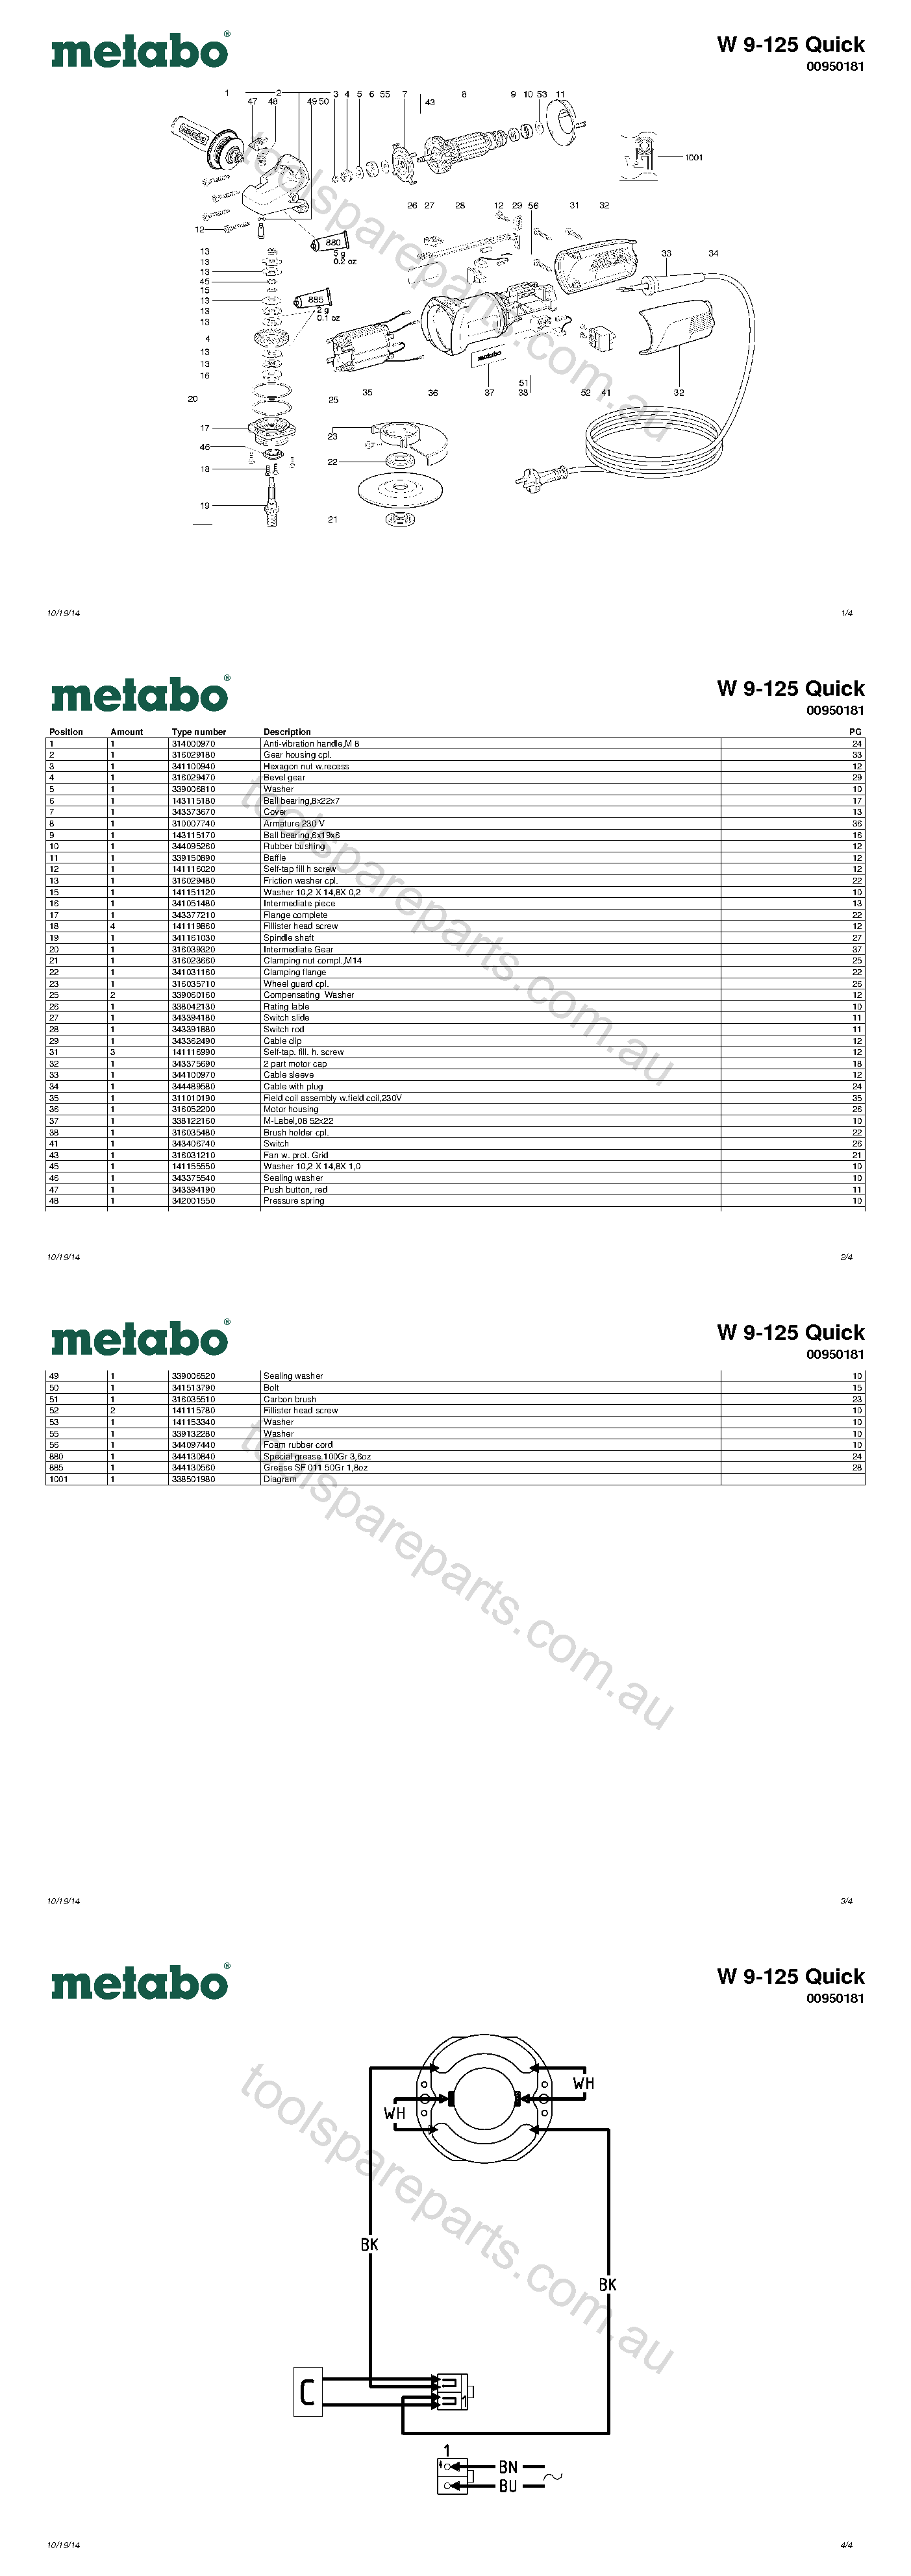 Metabo W 9-125 Quick 00950181  Diagram 1